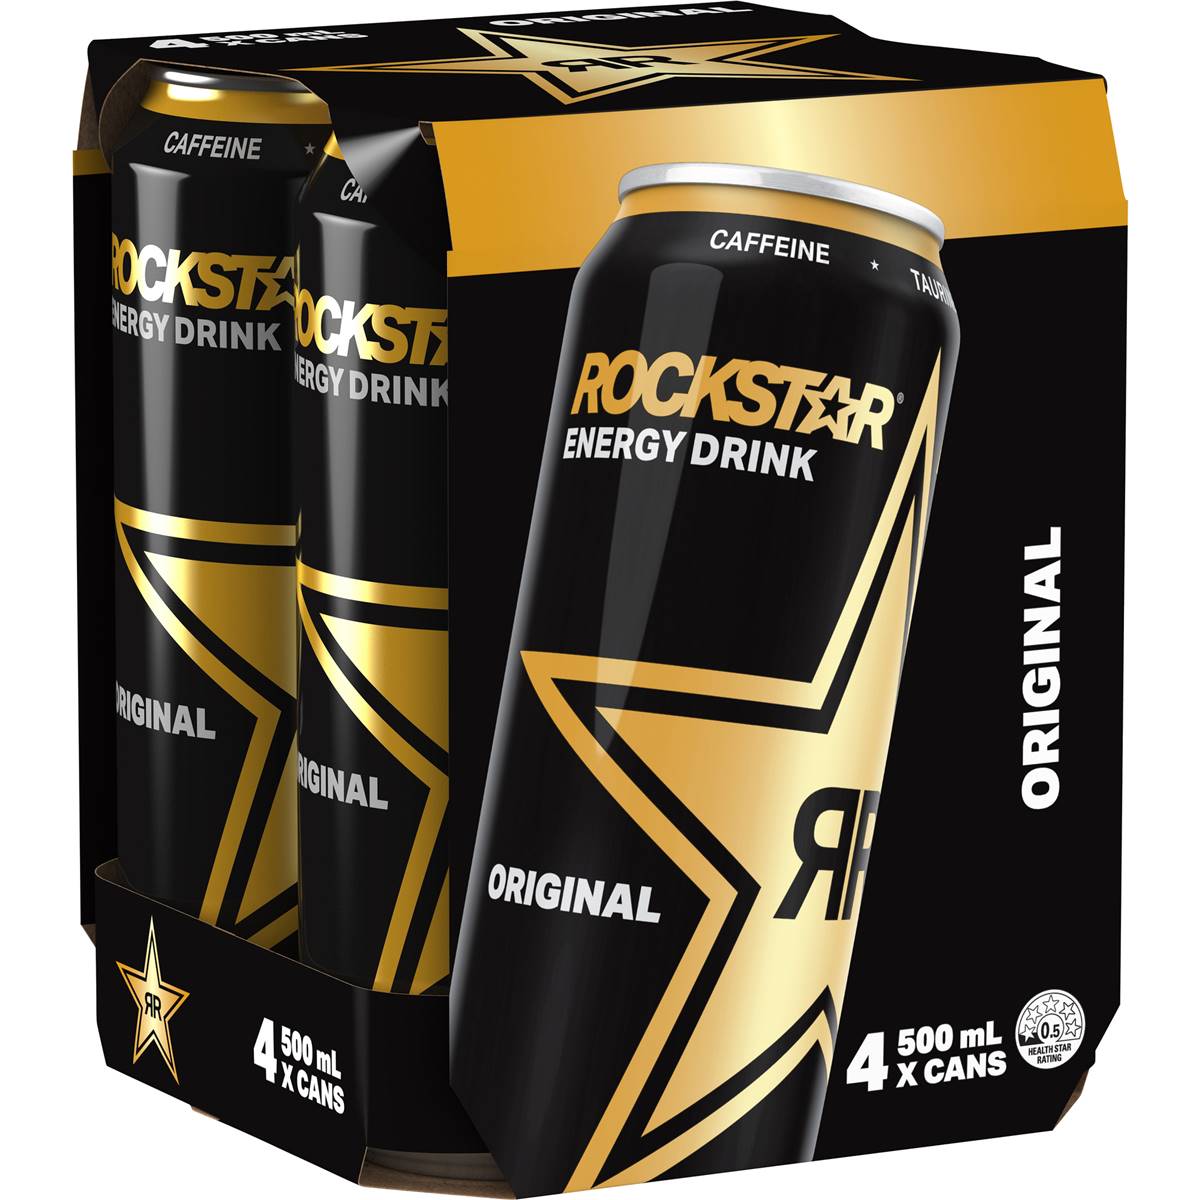 Calories in Rockstar Energy Drink Original